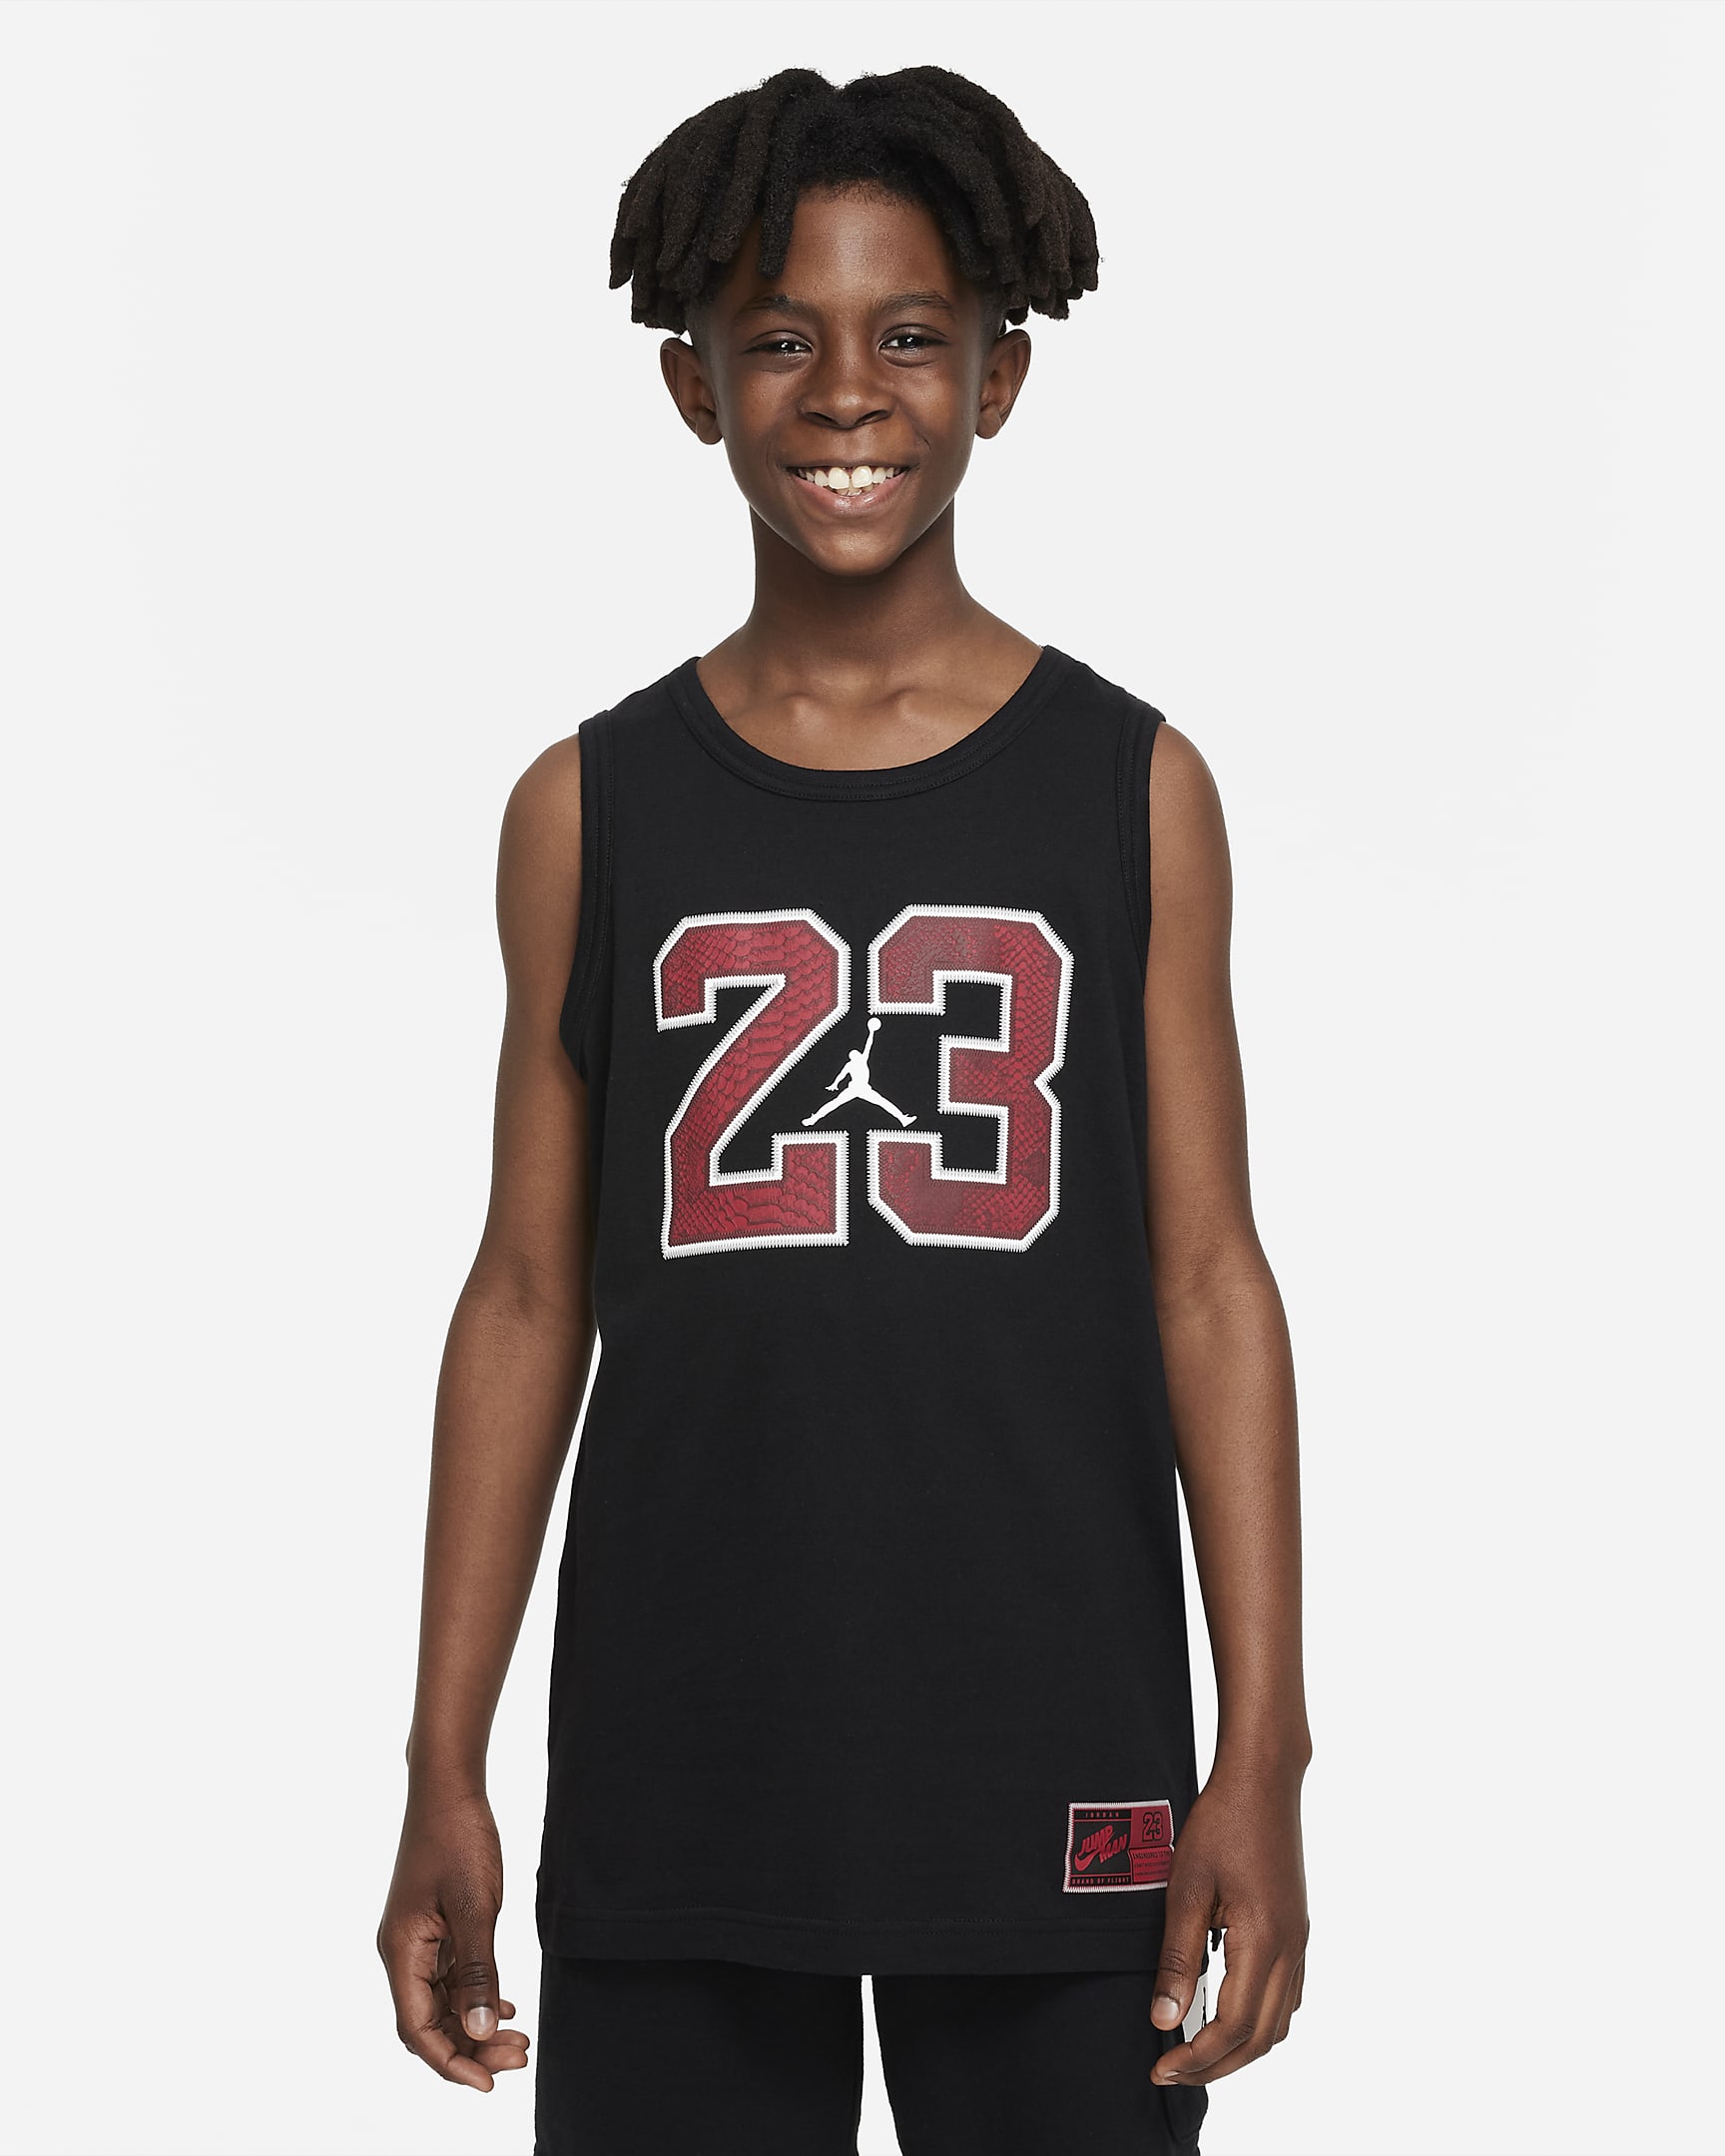 Jordan Big Kids' (Boys') Tank. Nike.com